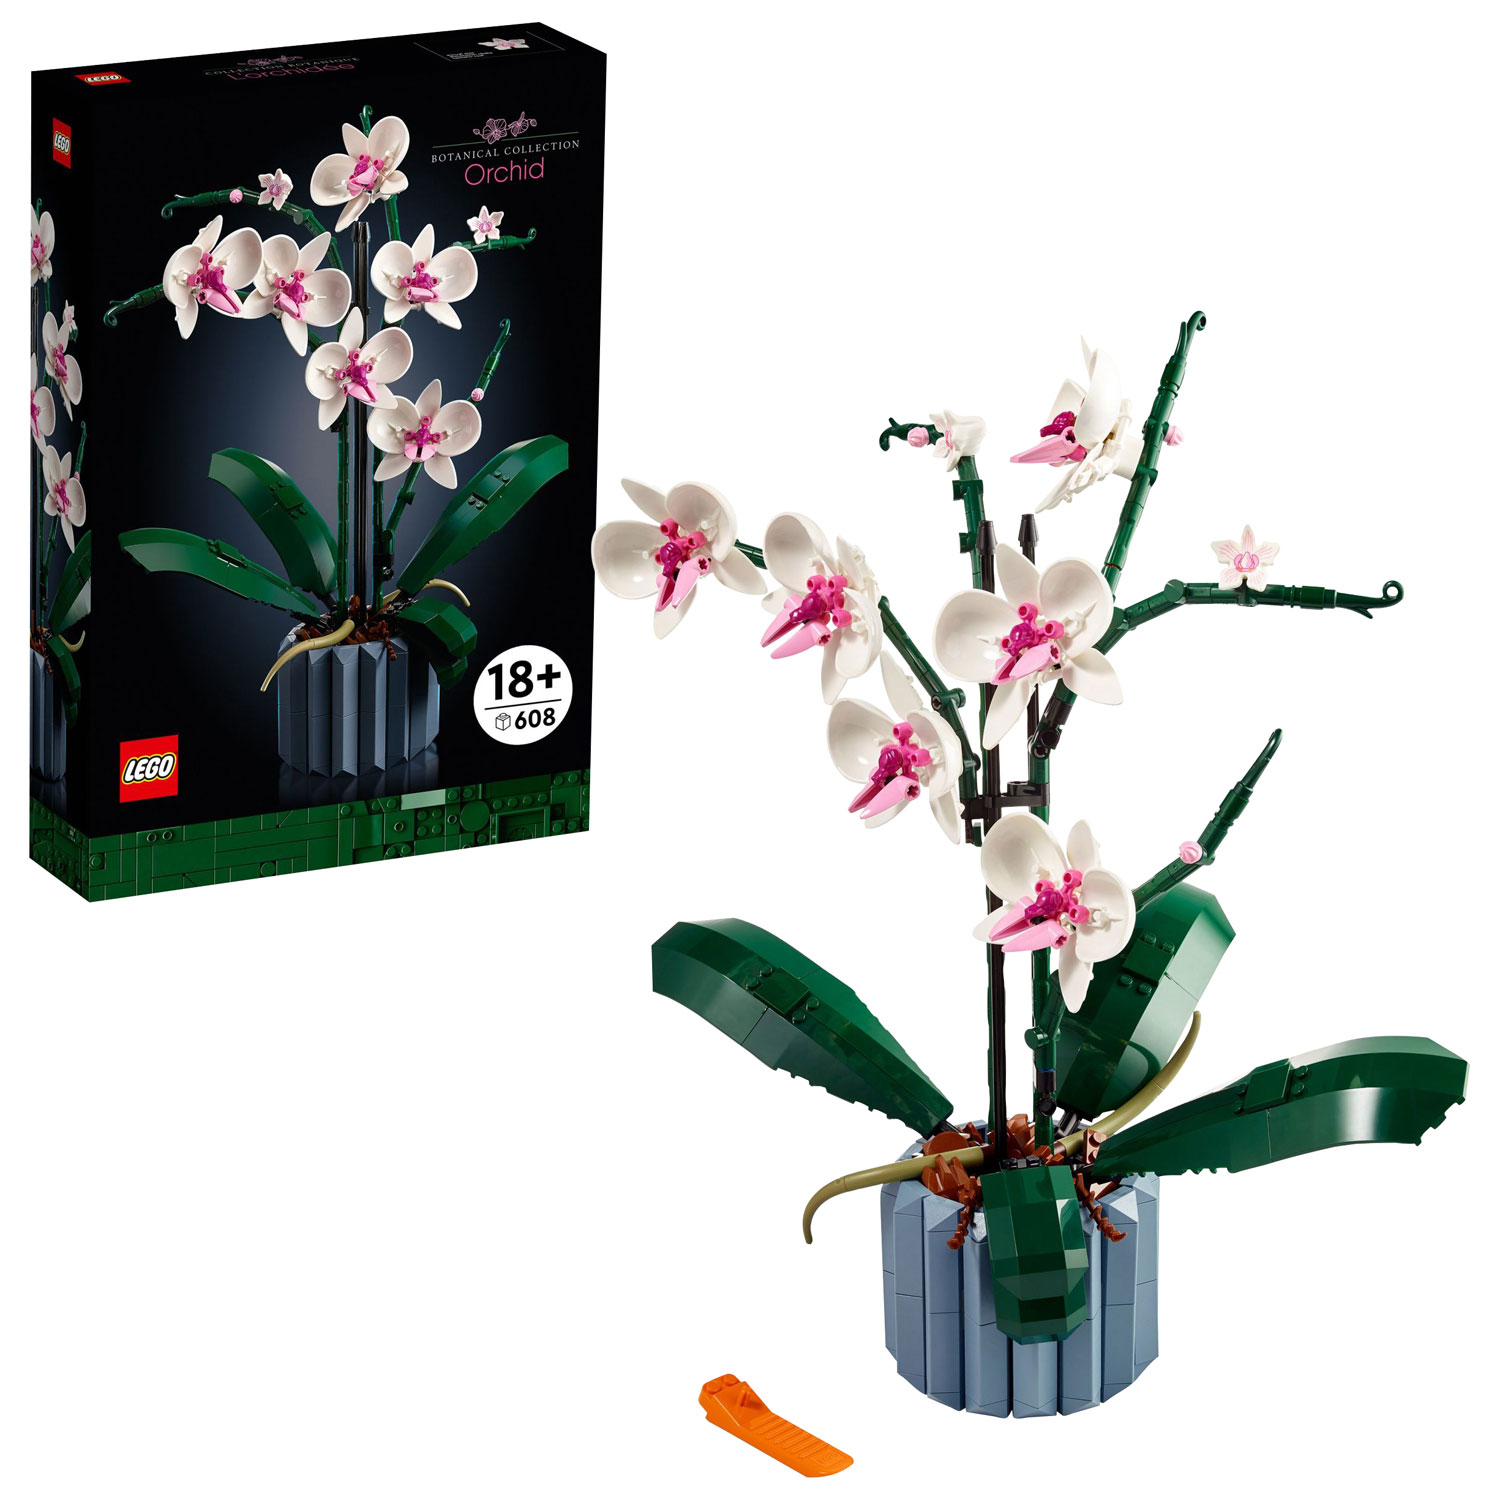 LEGO Botanical: Orchid - 608 Pieces (10311)